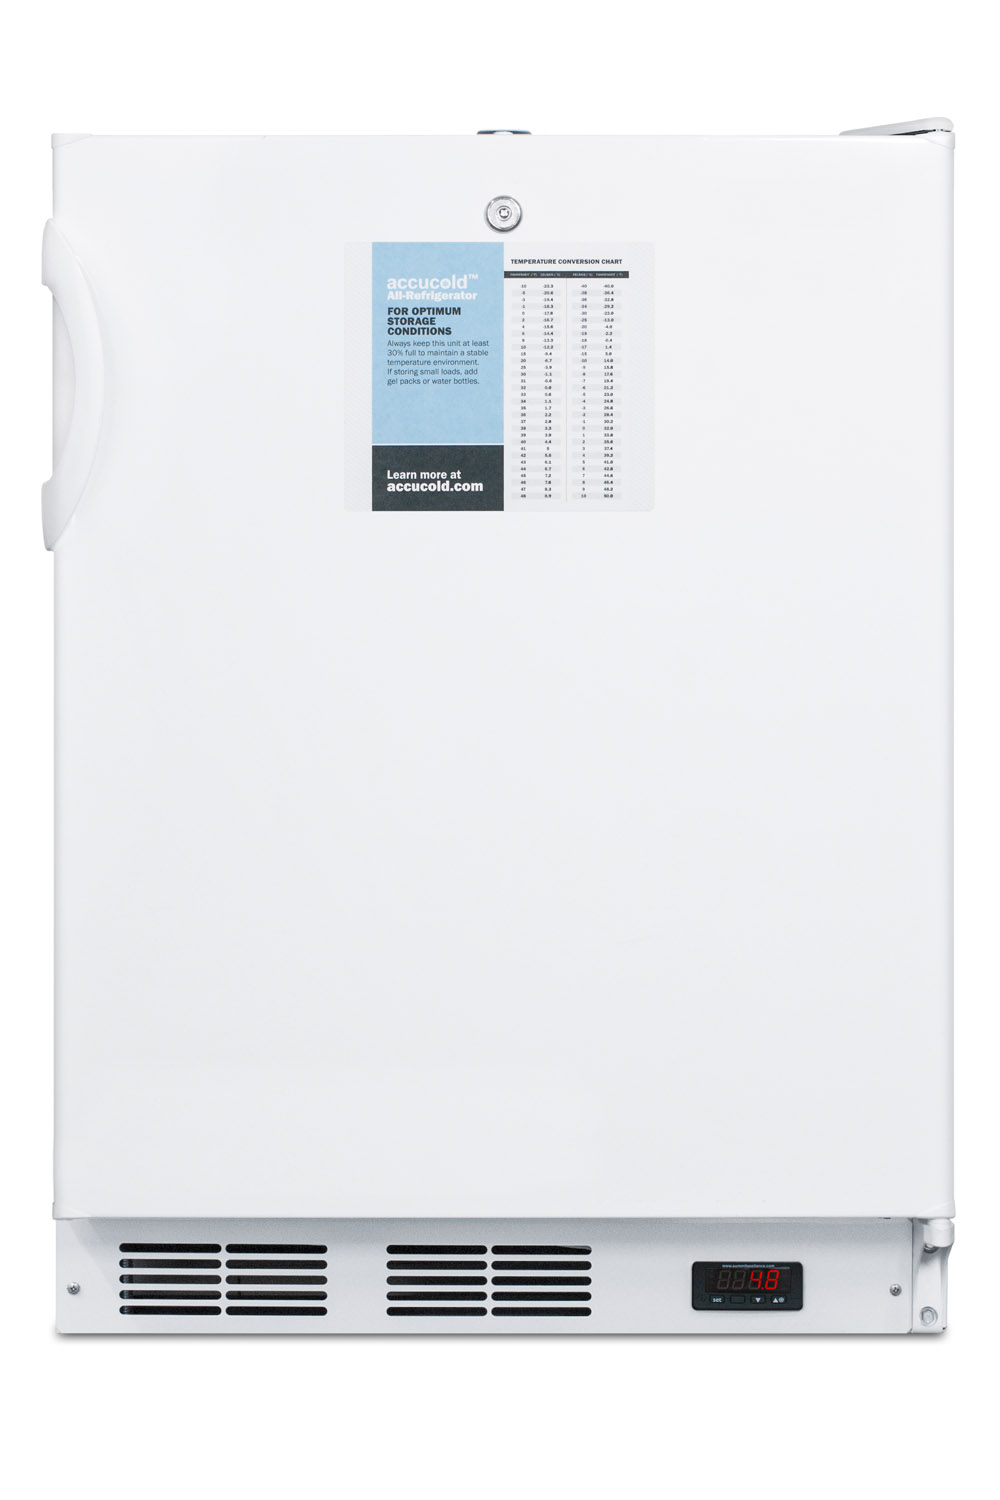 Summit 24" Wide All-Refrigerator, ADA Compliant